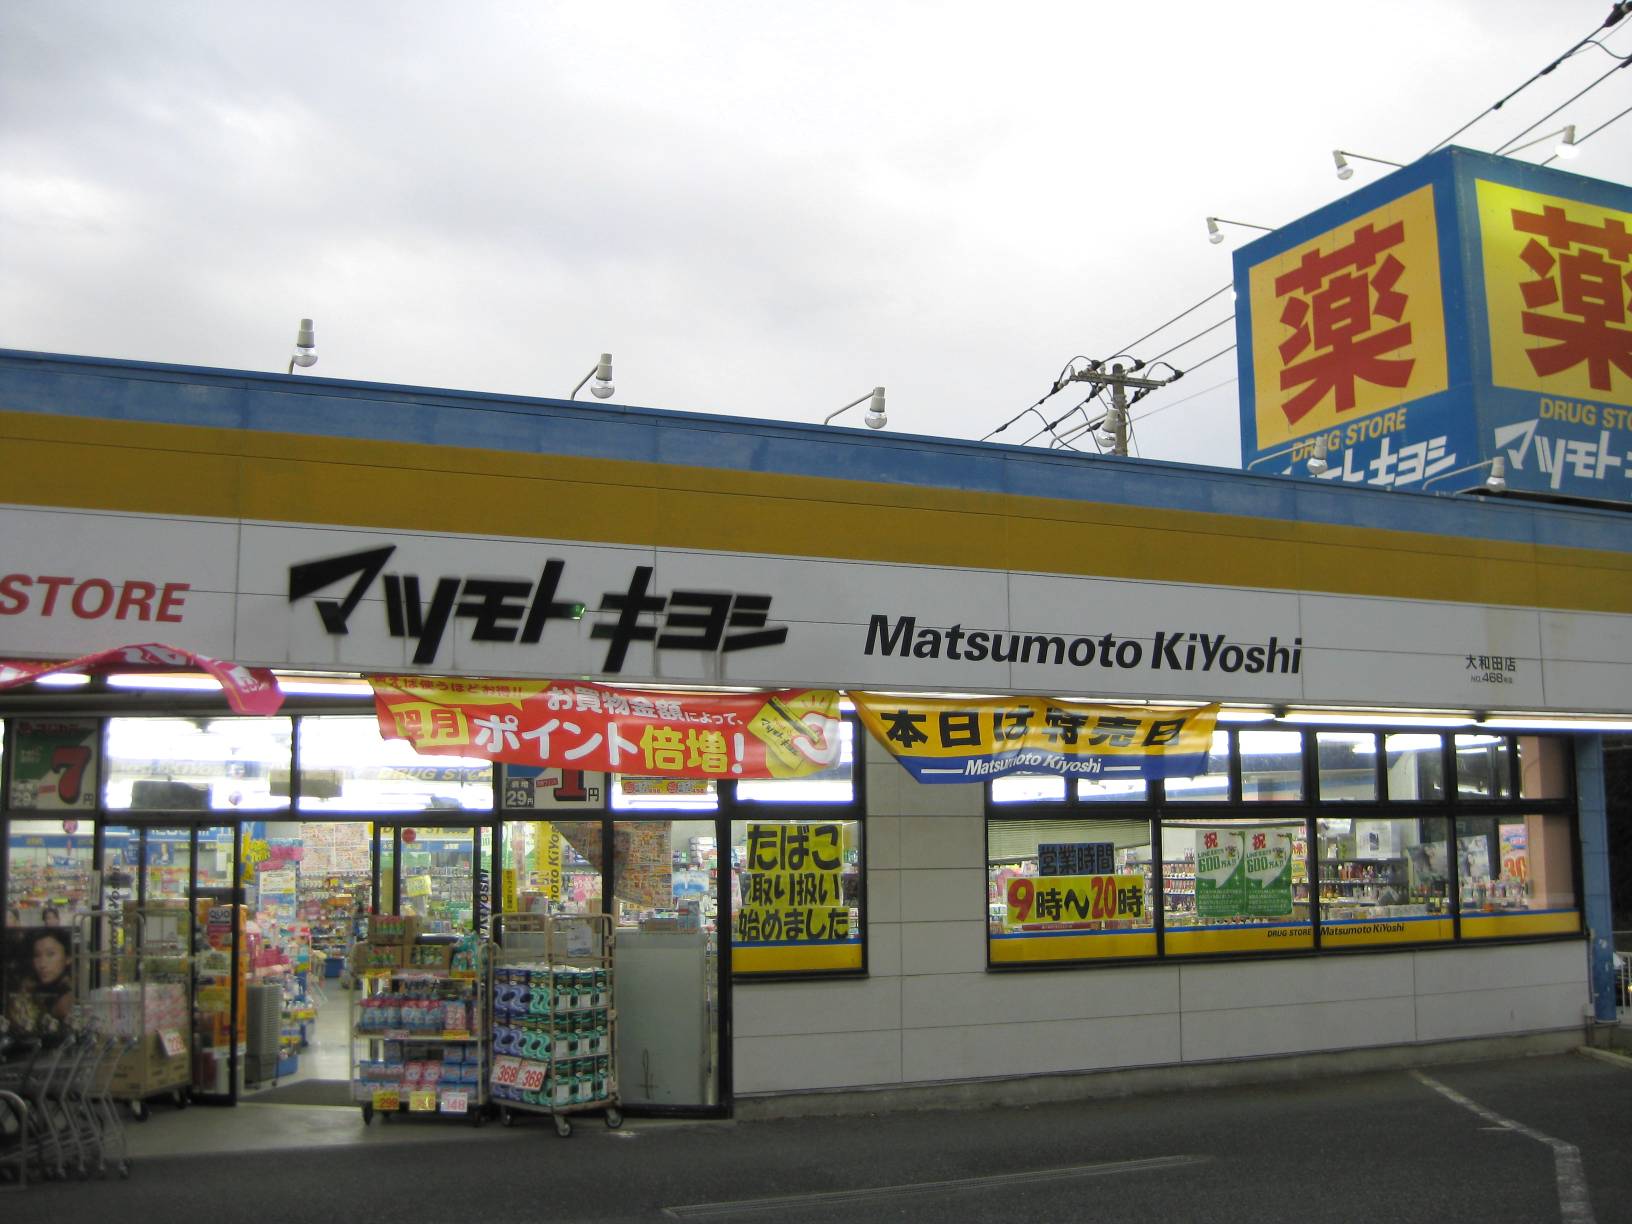 Dorakkusutoa. Matsumotokiyoshi drugstore Owada store 963m to (drugstore)